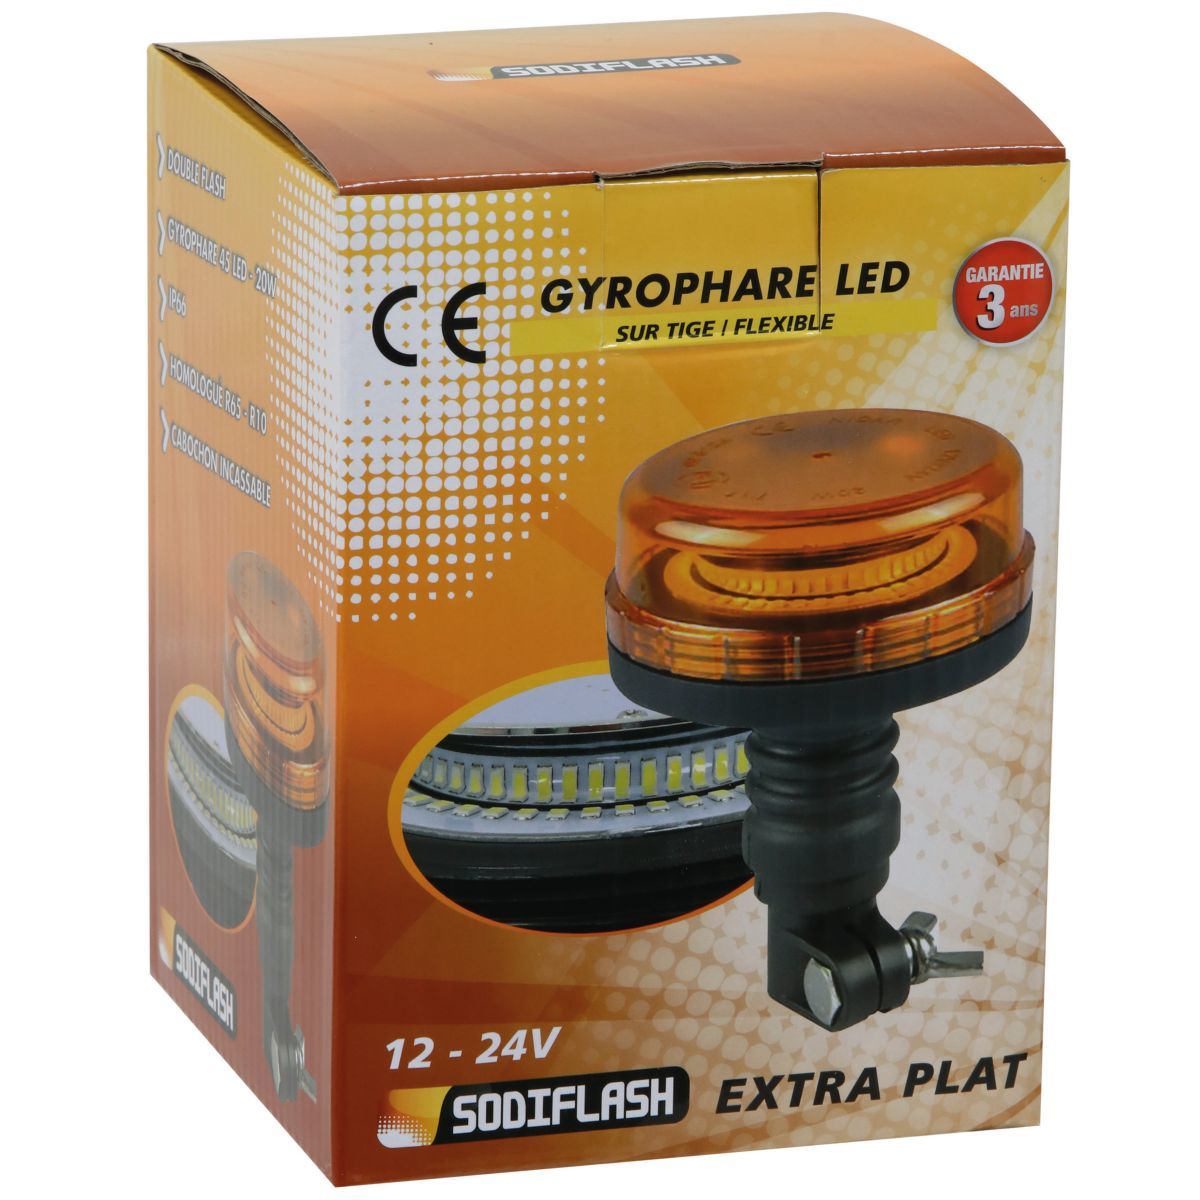 Gyrophare 45 LED extra plat sur tige 20W double flash,12/24V